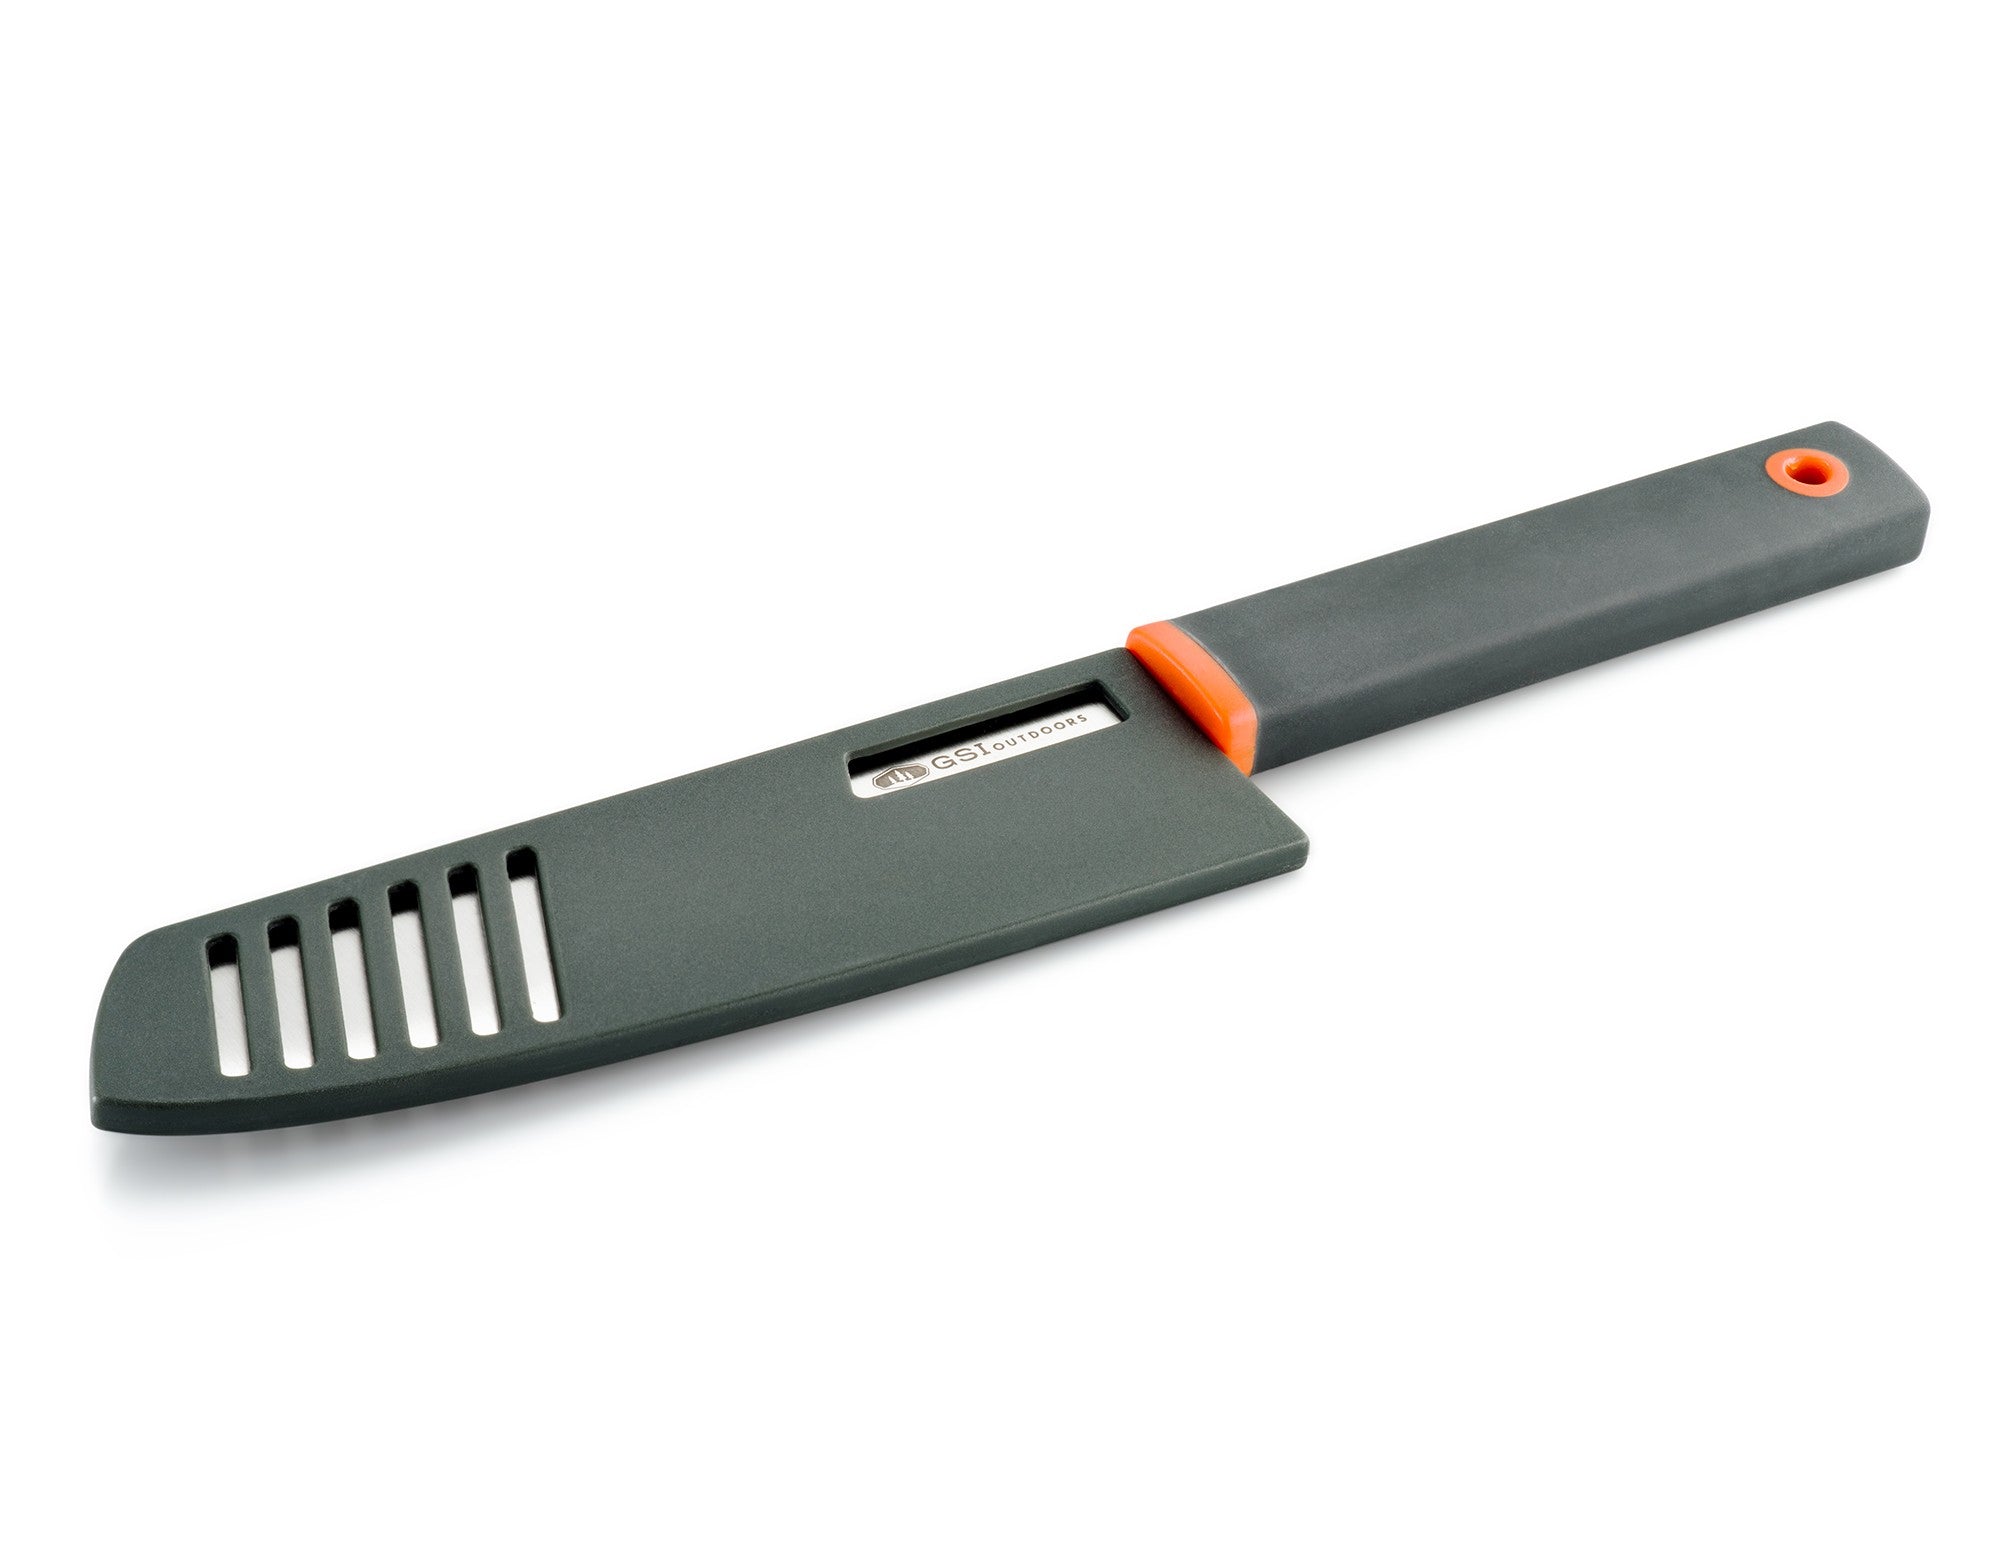 Rakau Folding Steak Knife Set for Outdoor Cooking